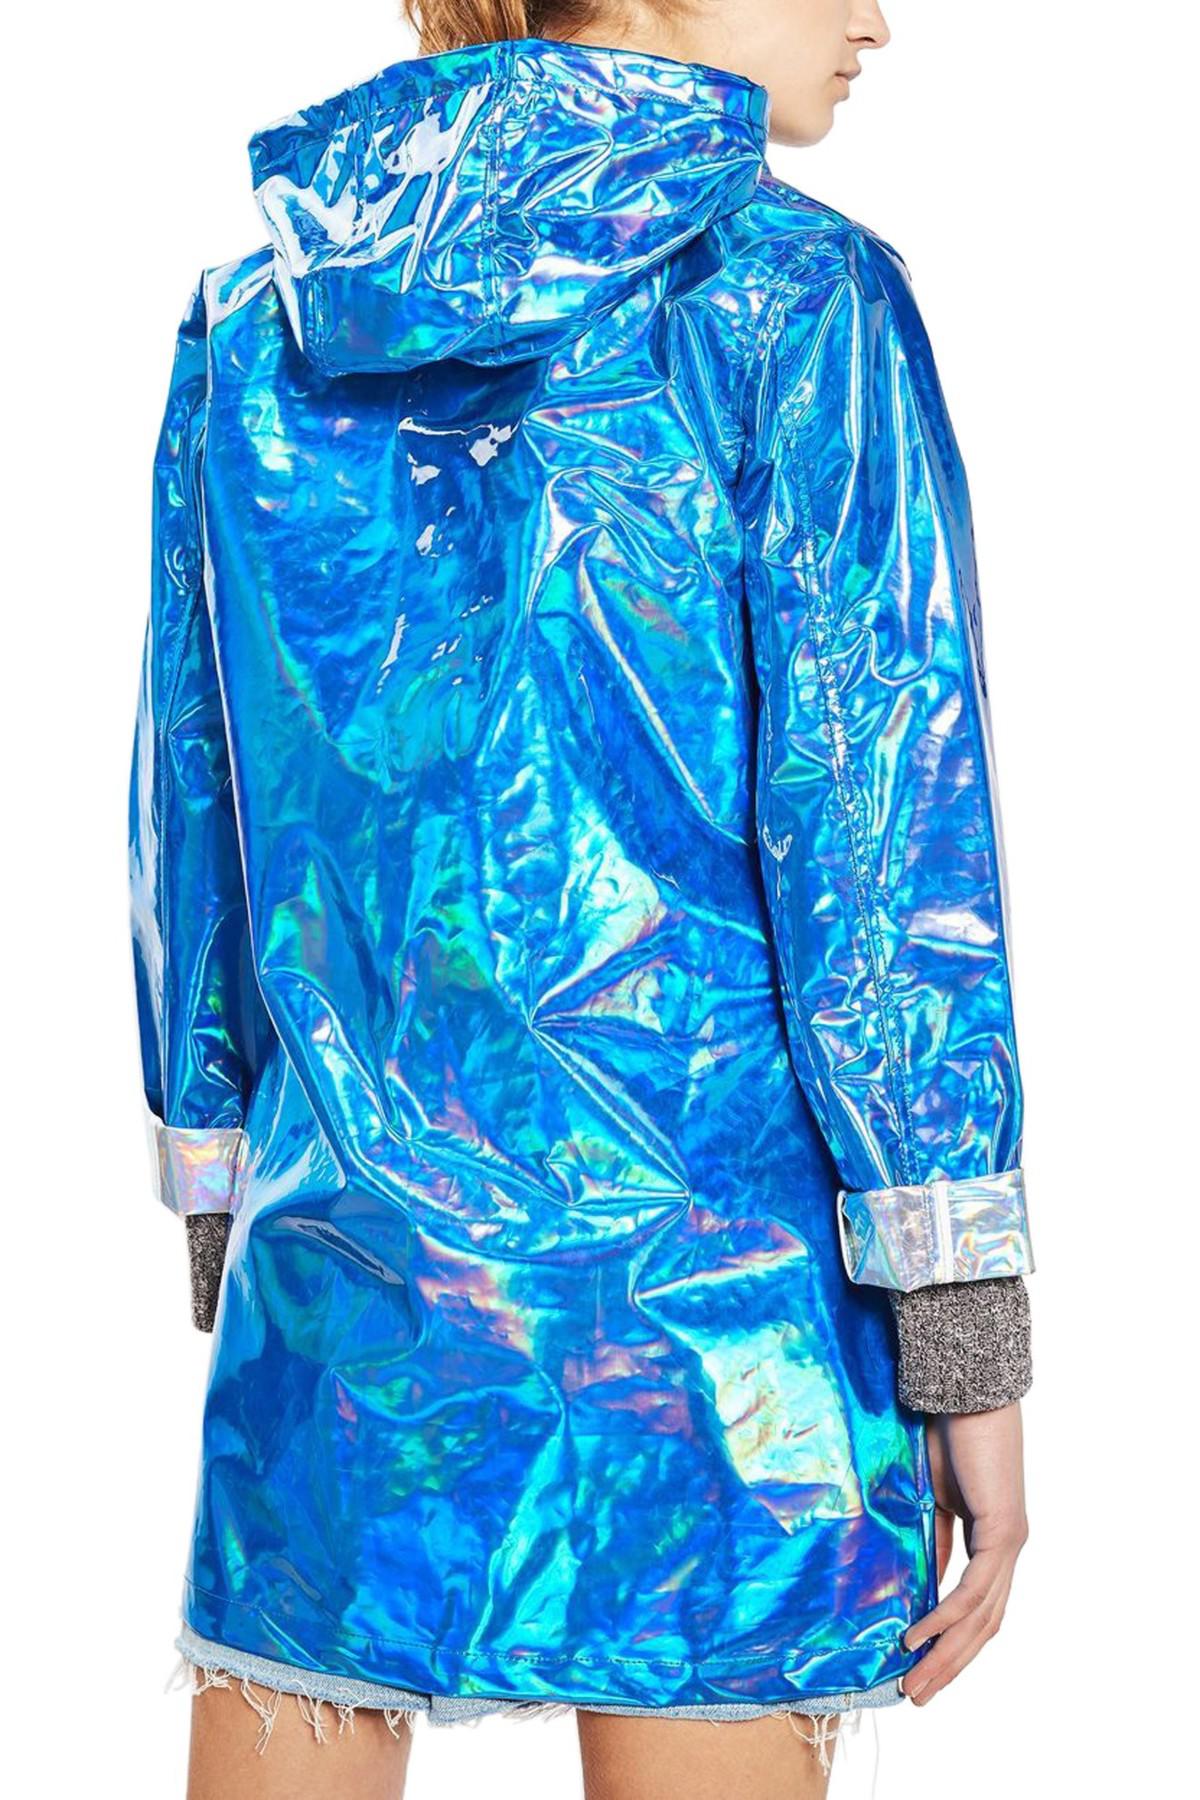 TOPSHOP Iridescent Rain Jacket in Blue | Lyst